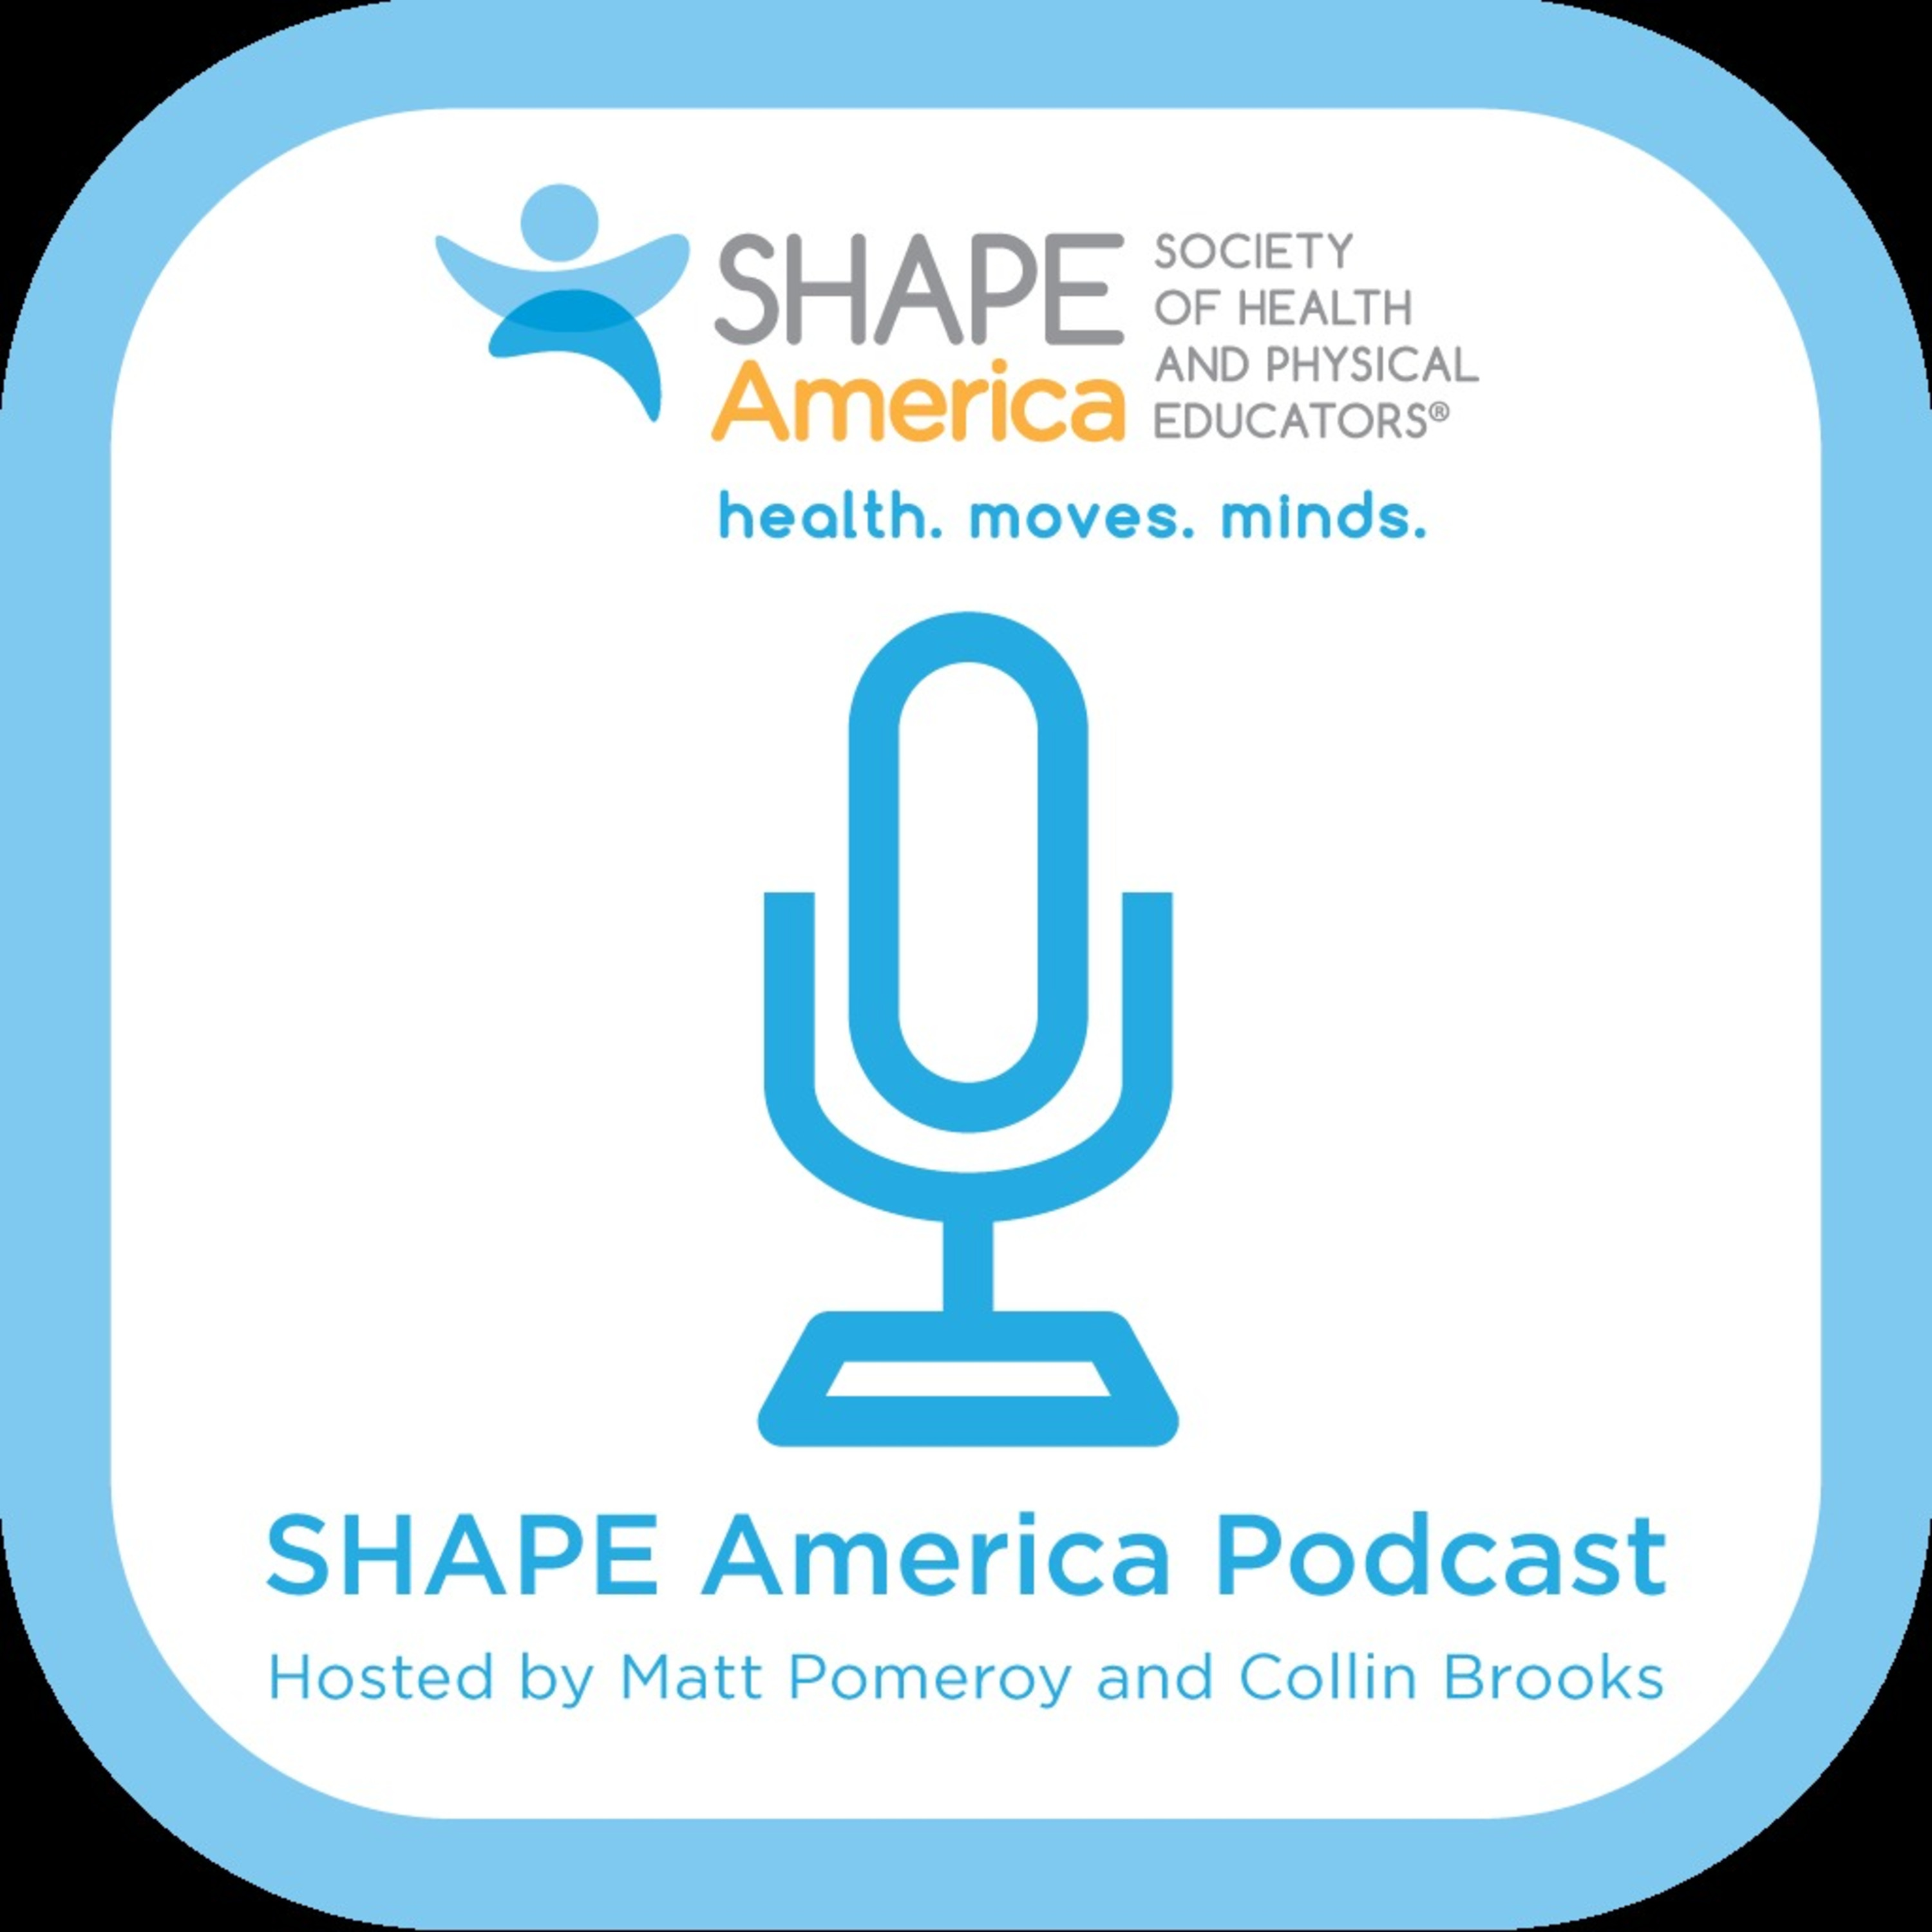 SHAPE America's Podcast Professional Development for Health